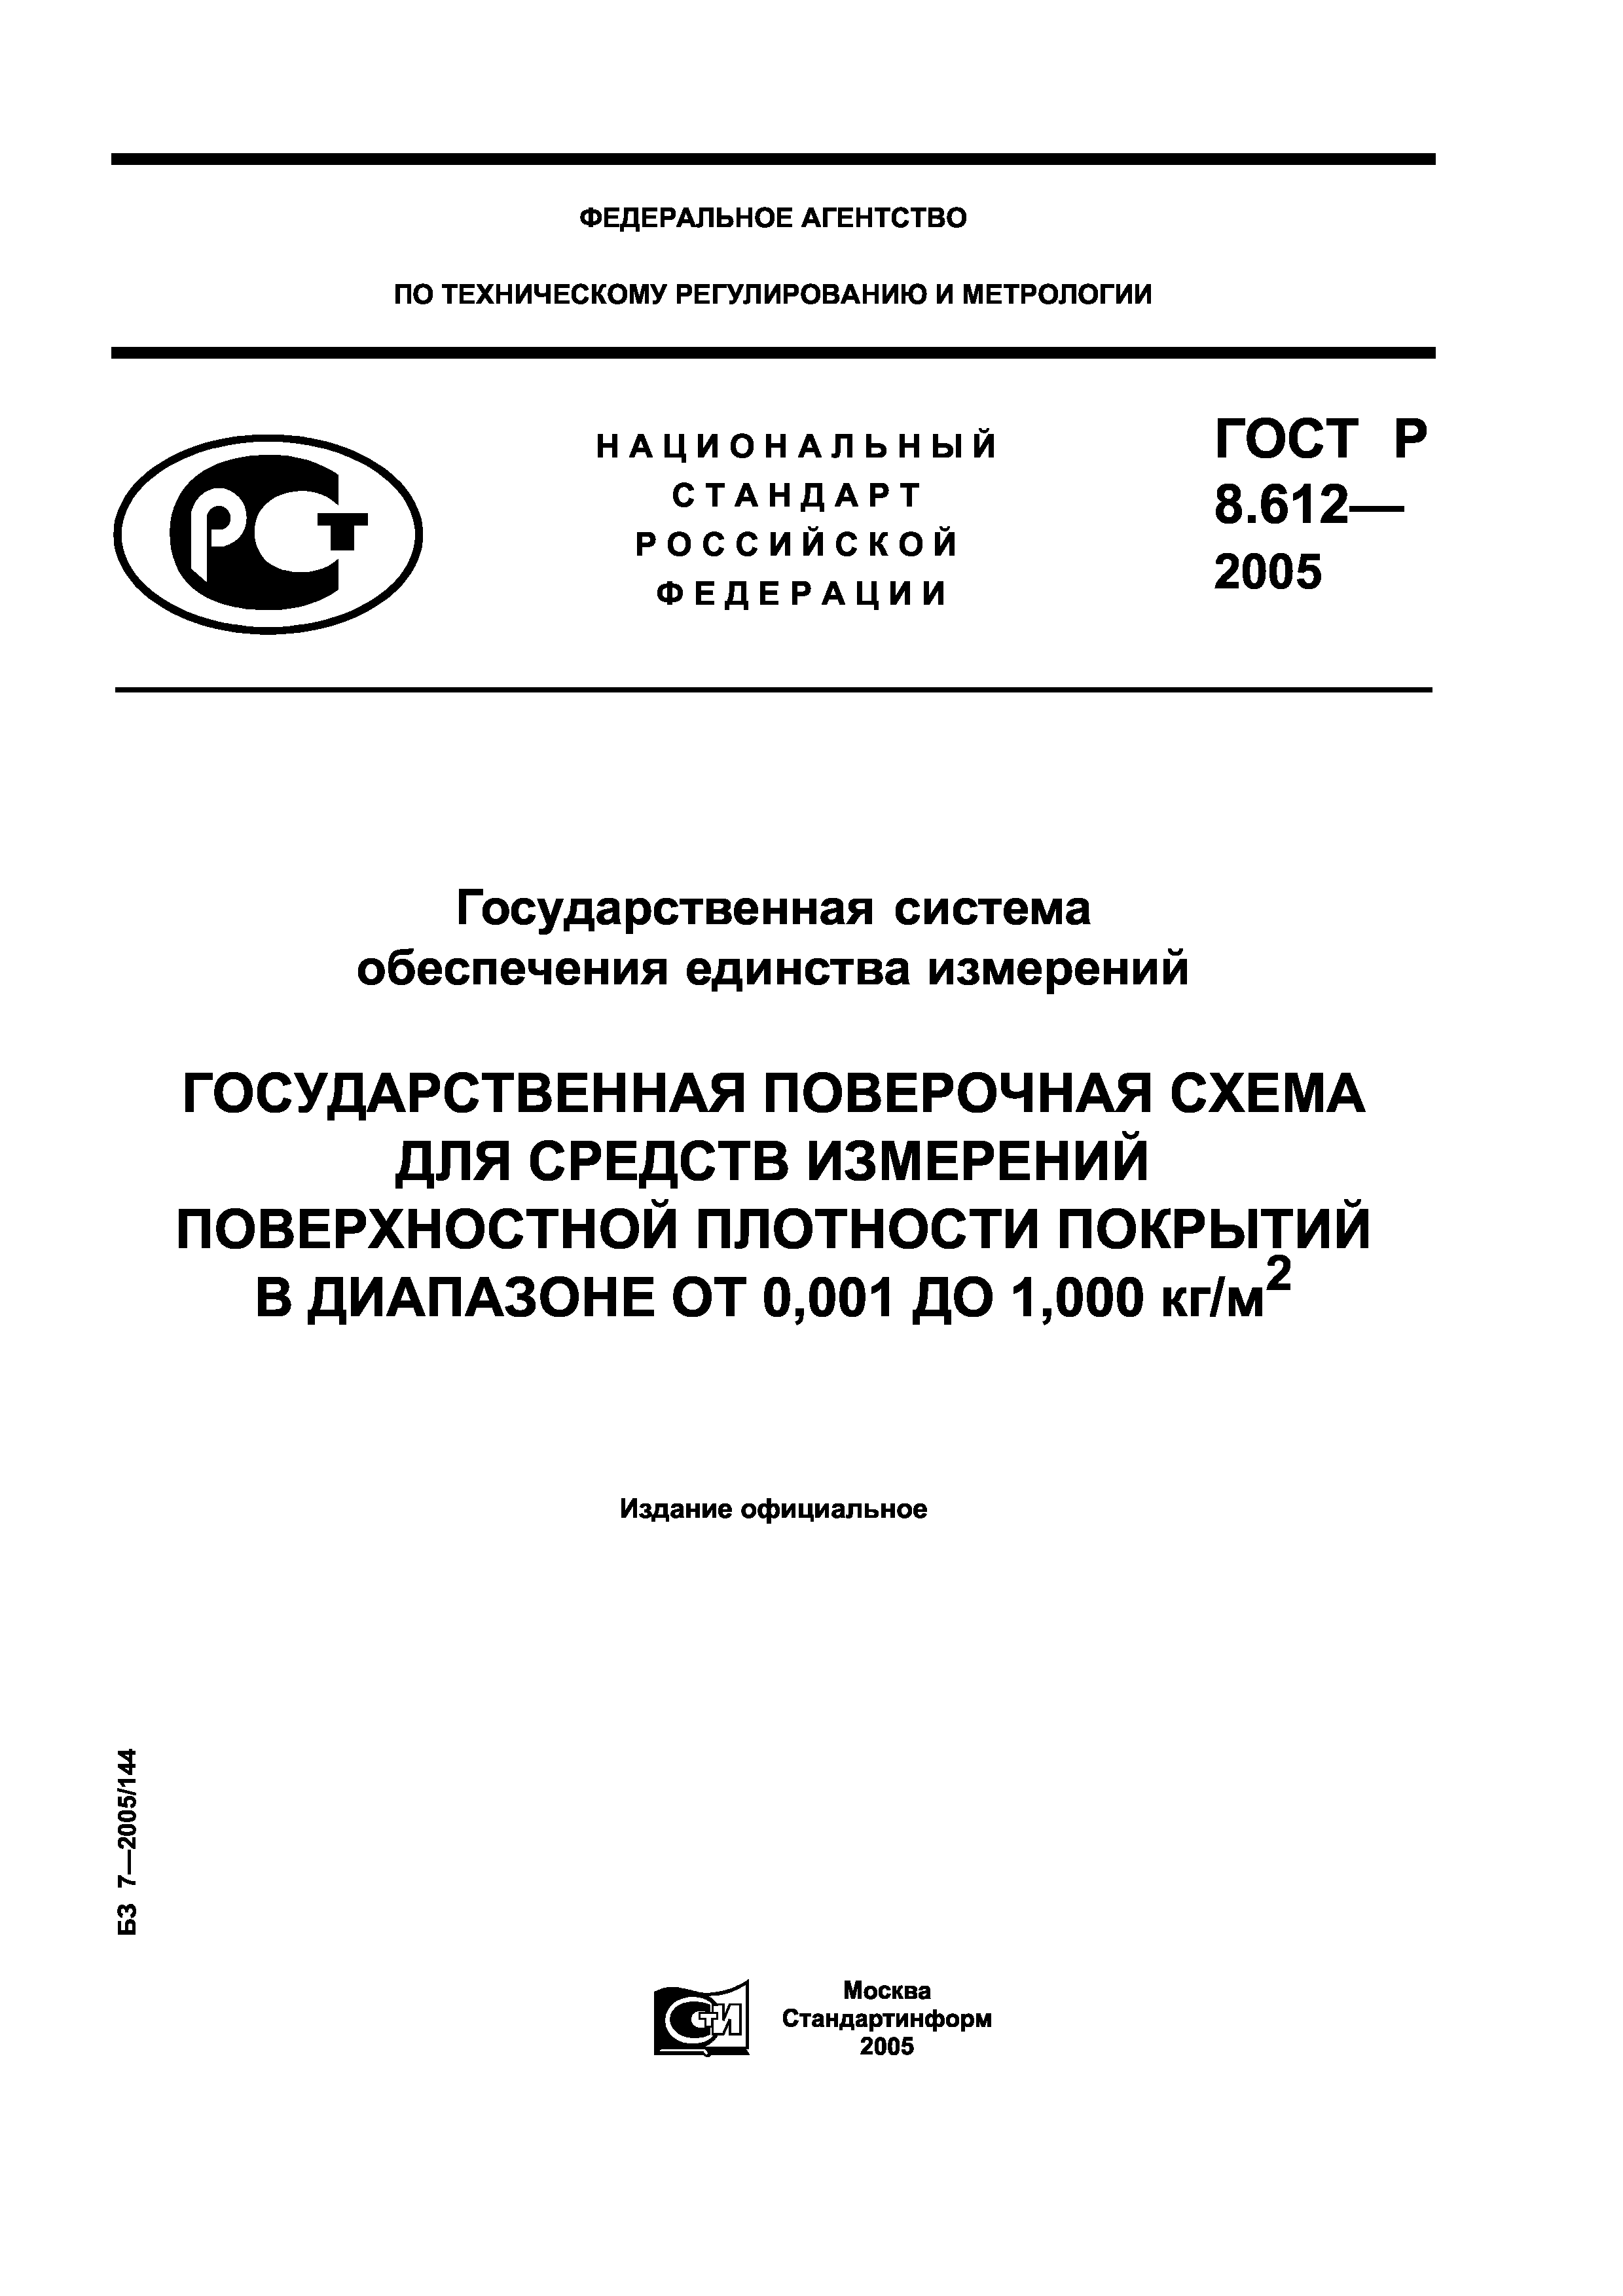 ГОСТ Р 8.612-2005